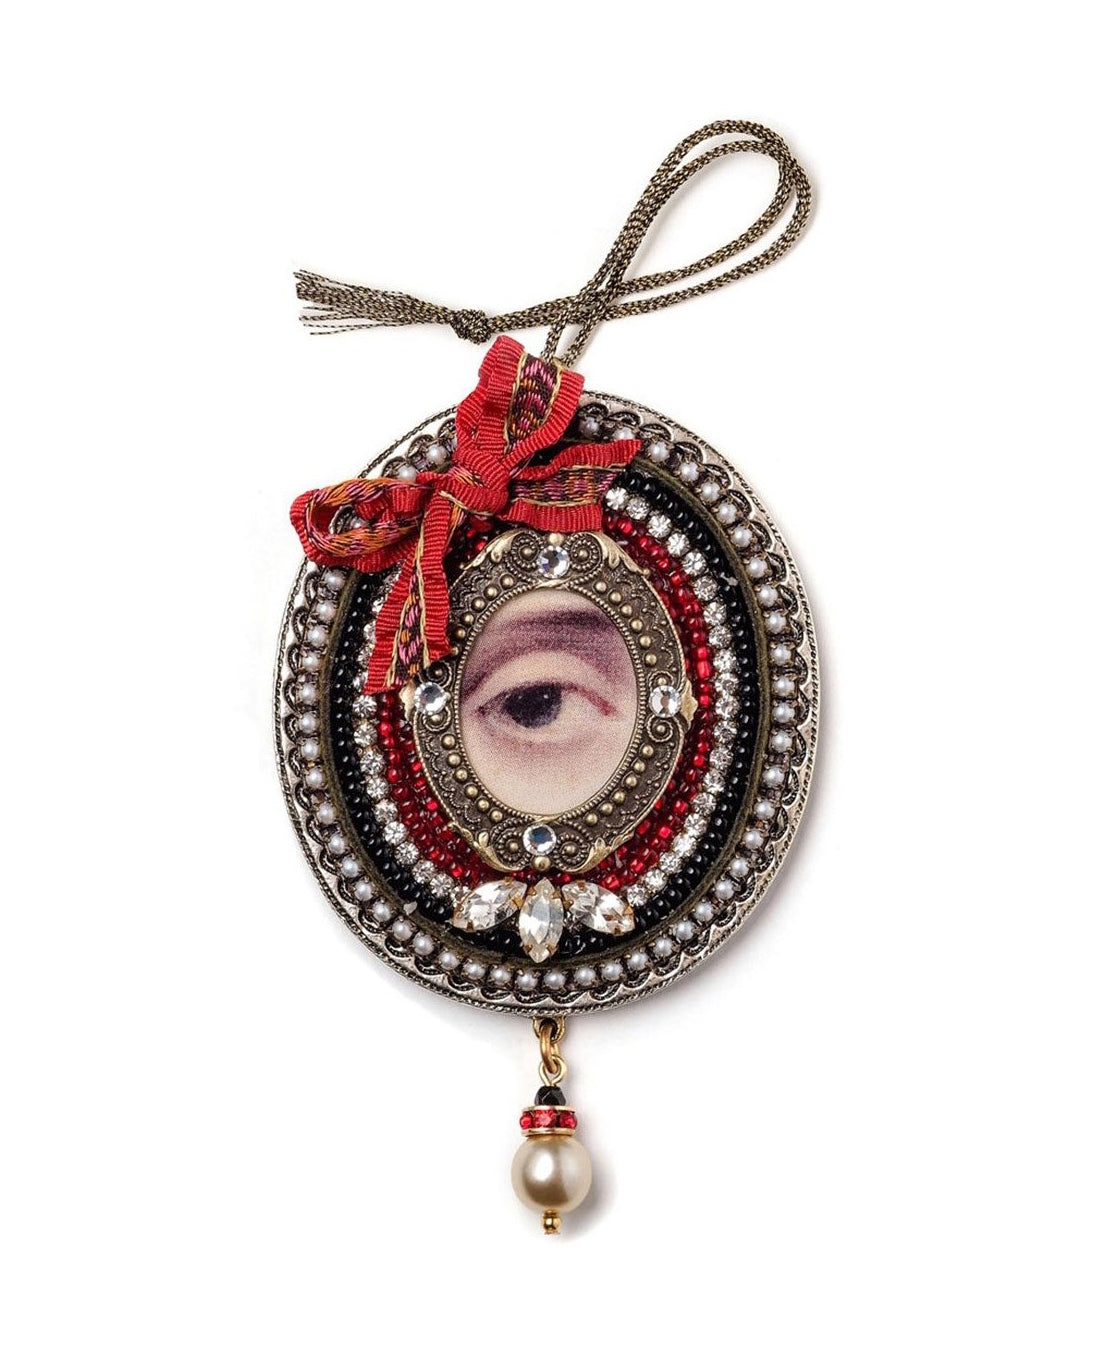 Georgian Era "Lover's Eye"-Style Ornament